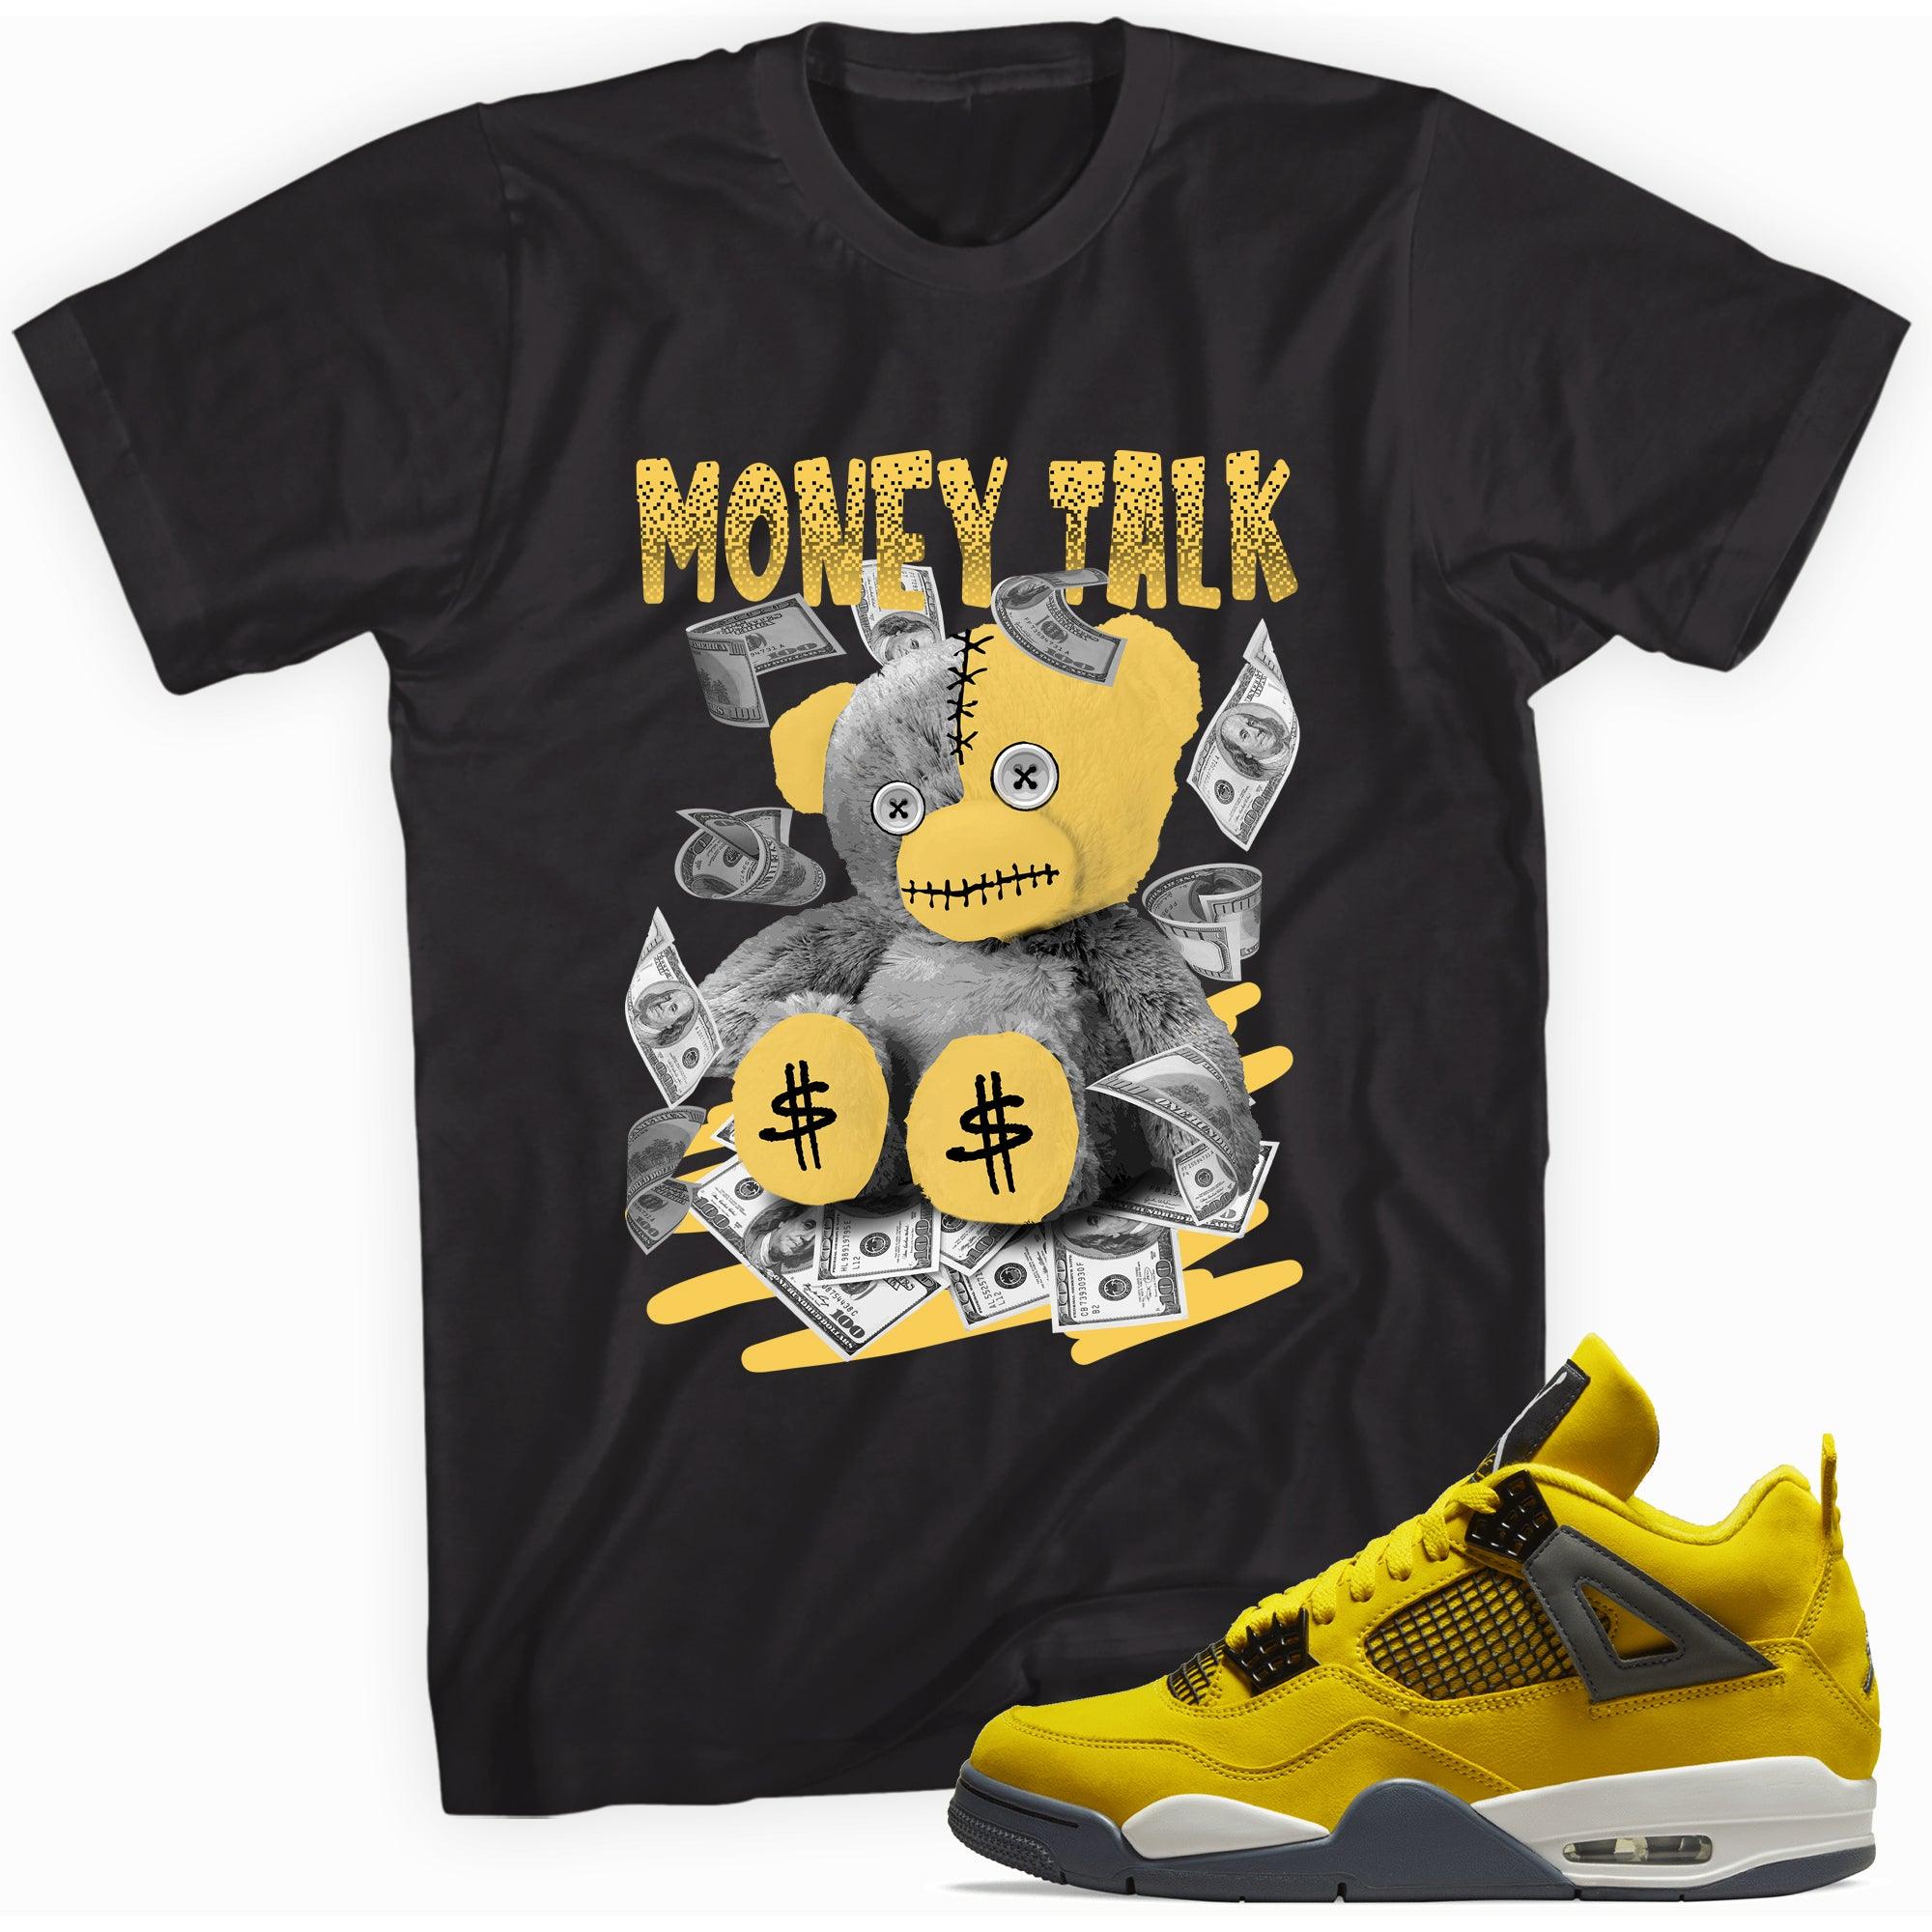 Money Talk Shirt AJ 4 Retro Lightning 2021 photo